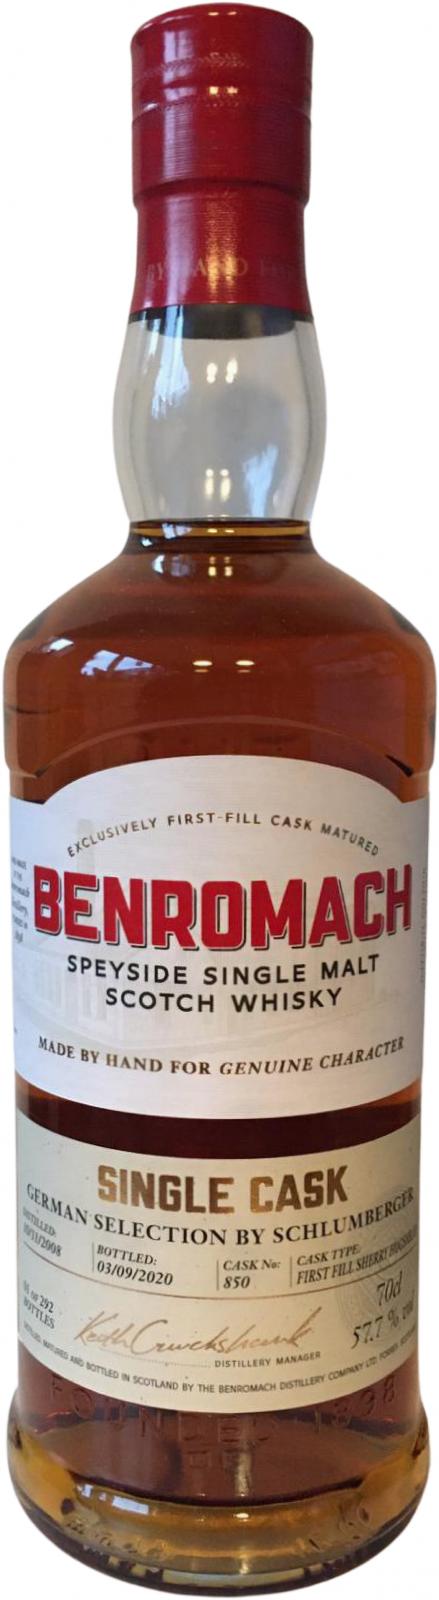 Benromach 2008 German Selection by Schlumberger 1st Fill Sherry Hogshead #850 57.7% 700ml